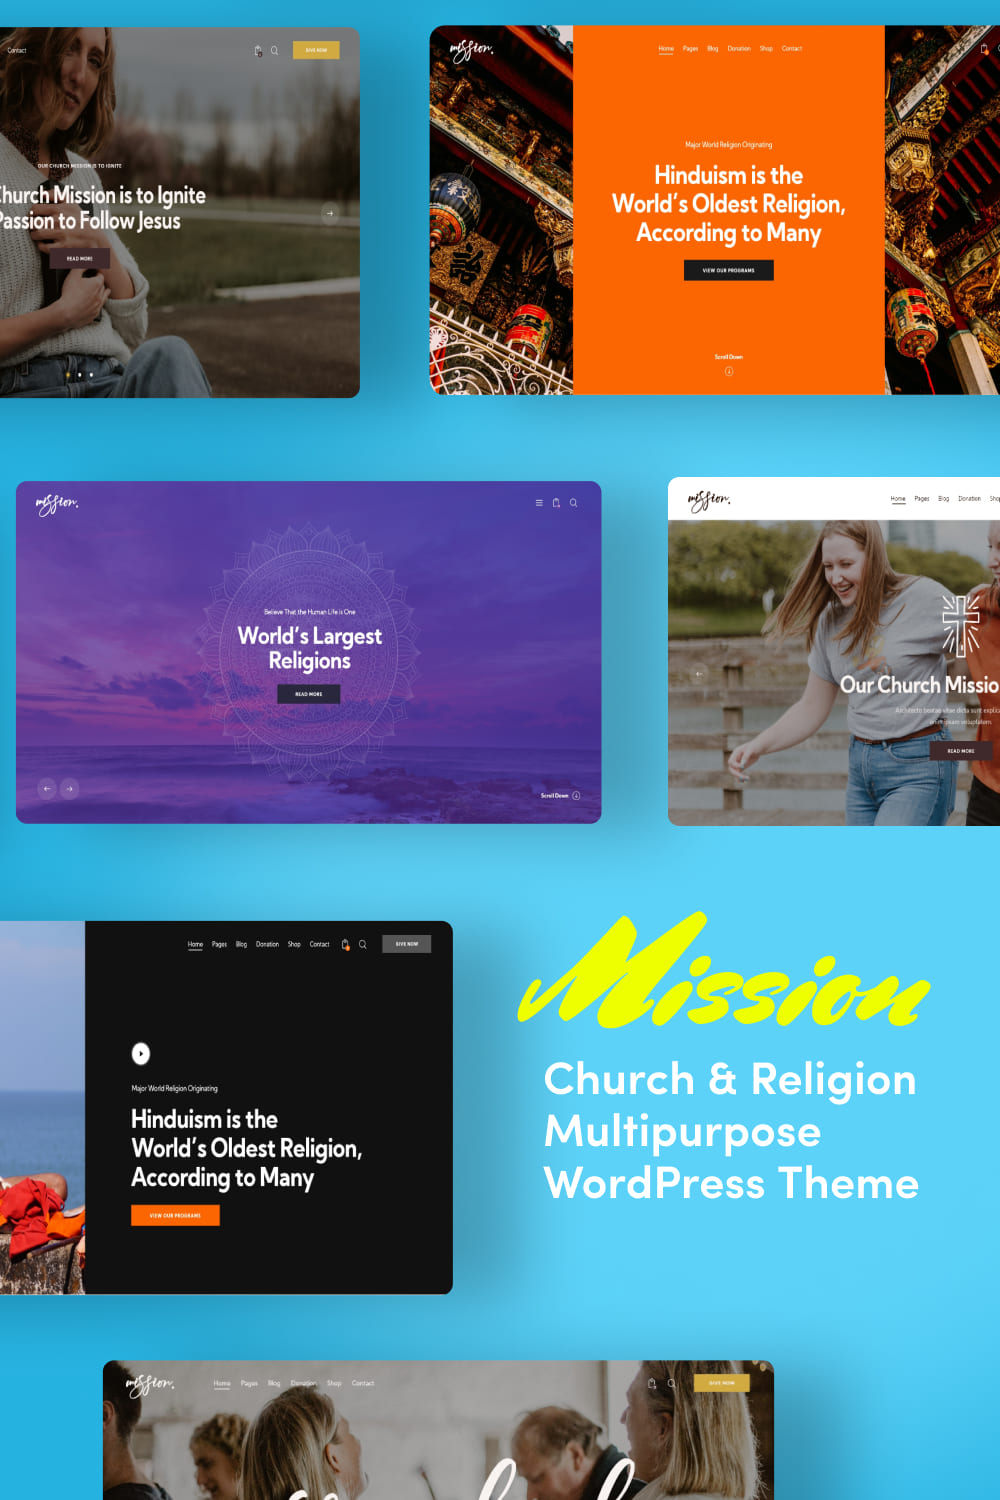 Mission - Church & Religion Multipurpose WordPress Theme - Pinterest.